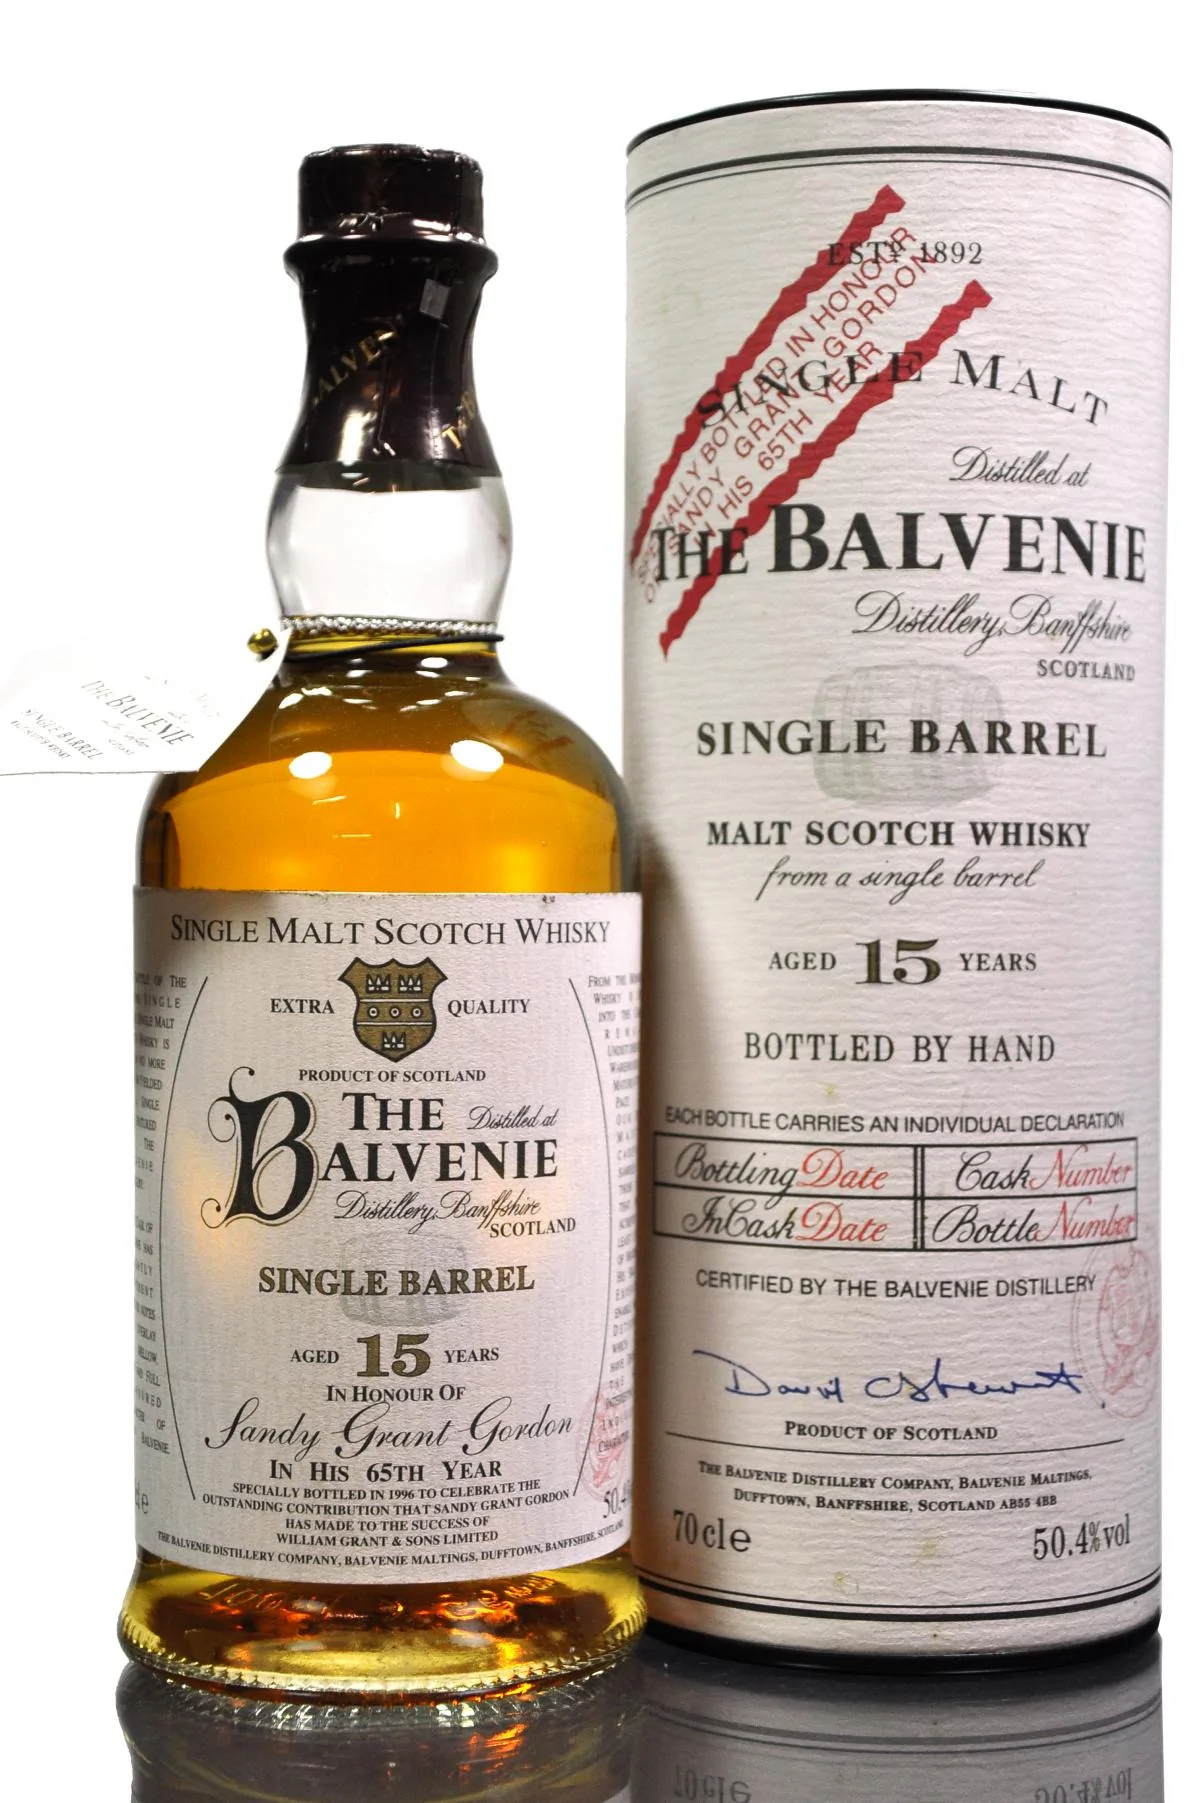 Balvenie 15 Year Old - Single Barrel 12558 - Sandy Grant Gordon 65th Birthday